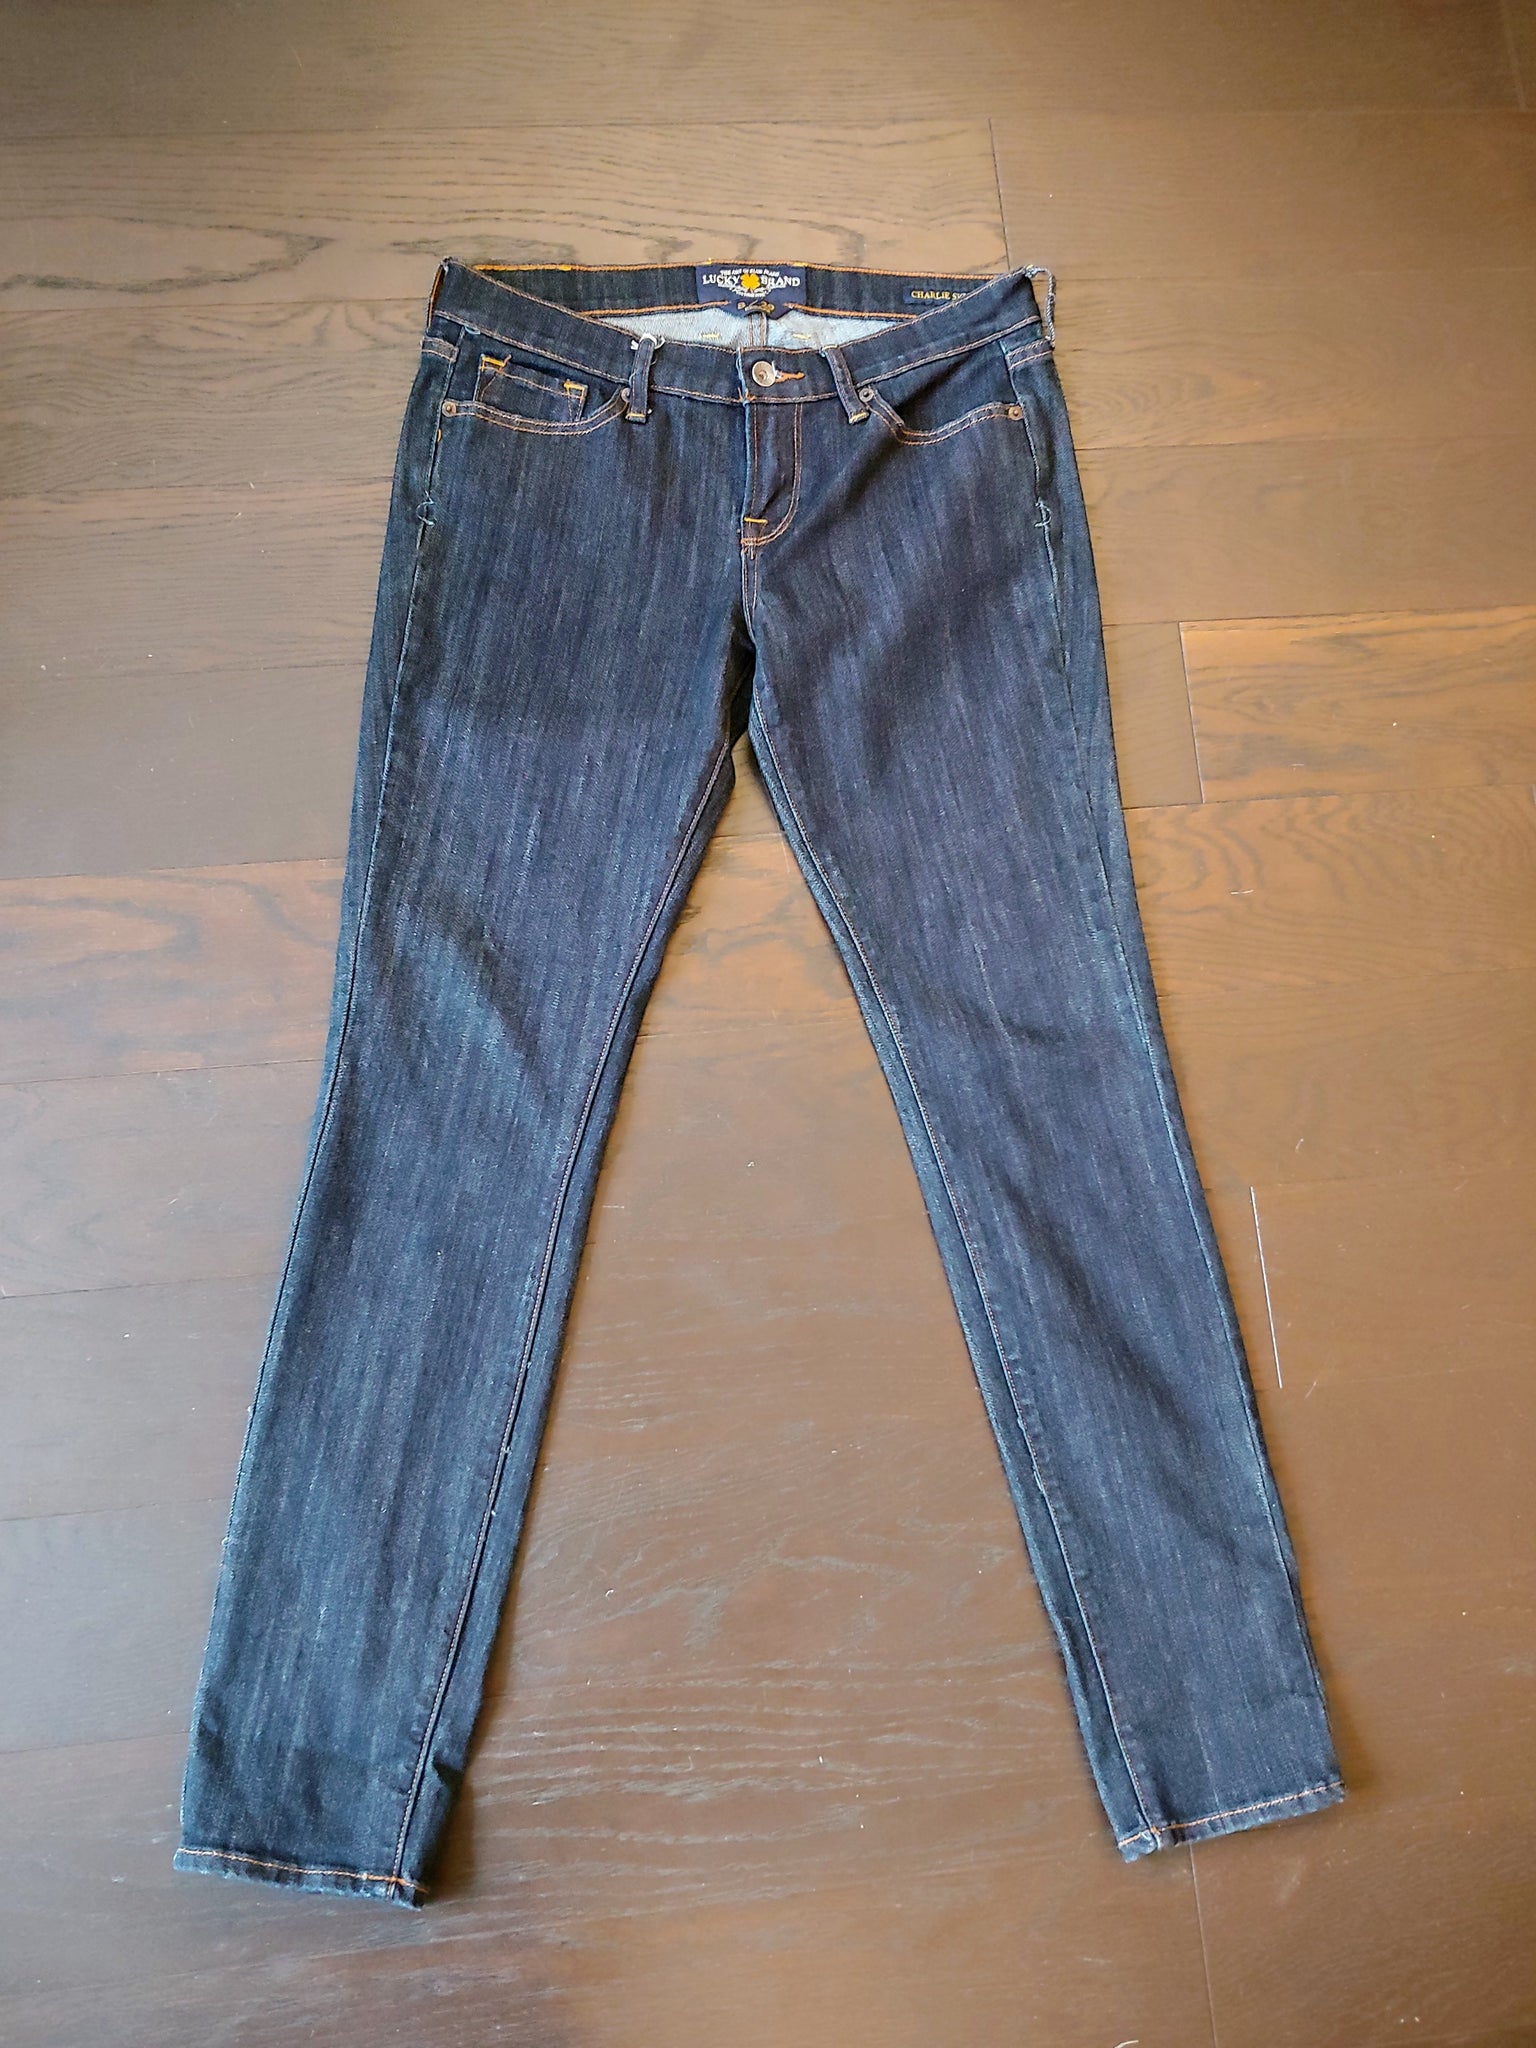 size 8 29 jeans